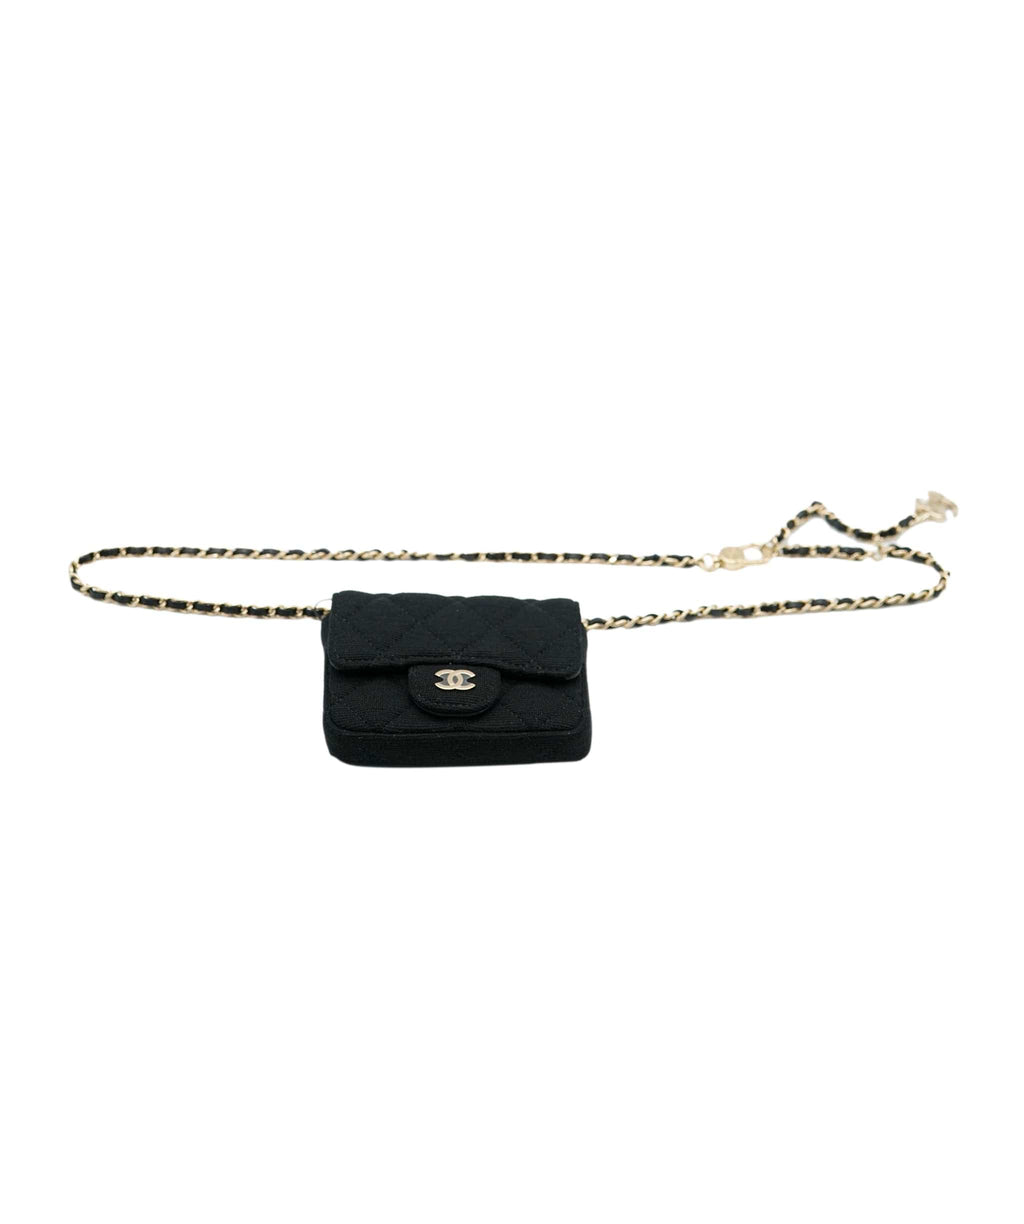 Belt bag  Shiny lambskin  goldtone metal pink  Fashion  CHANEL